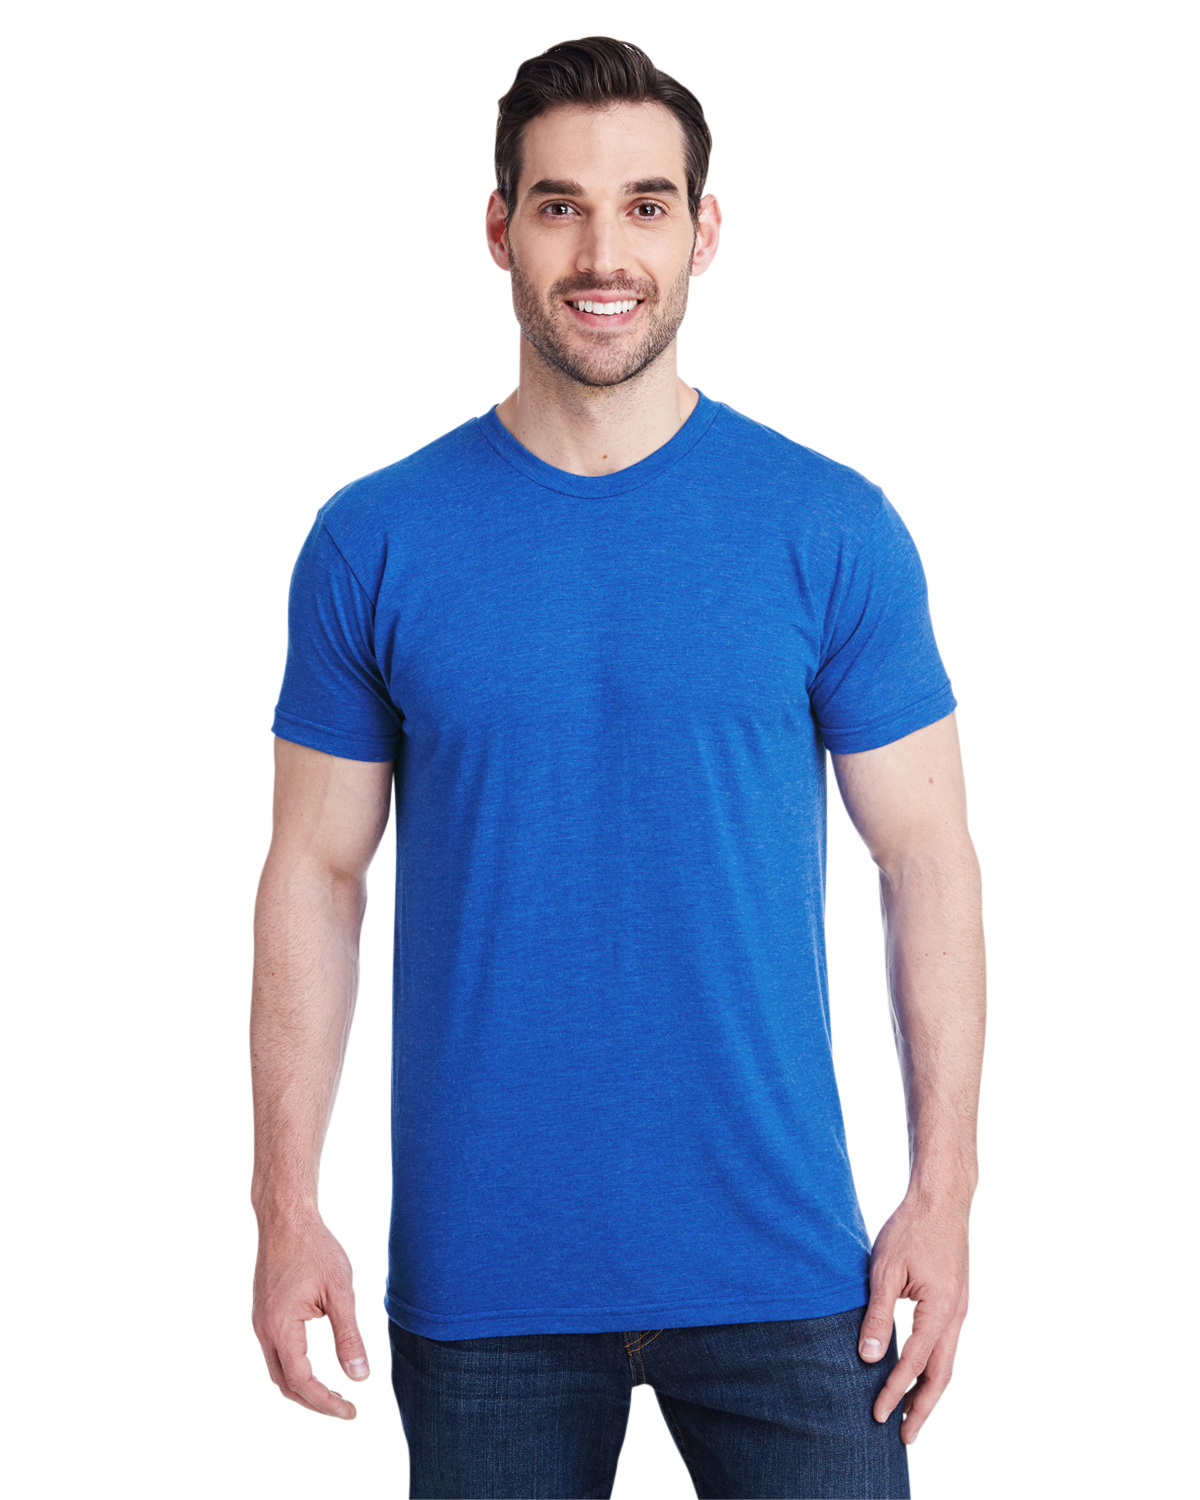 Bayside 5710 - Unisex Triblend T-Shirt $8.98 - T-Shirts